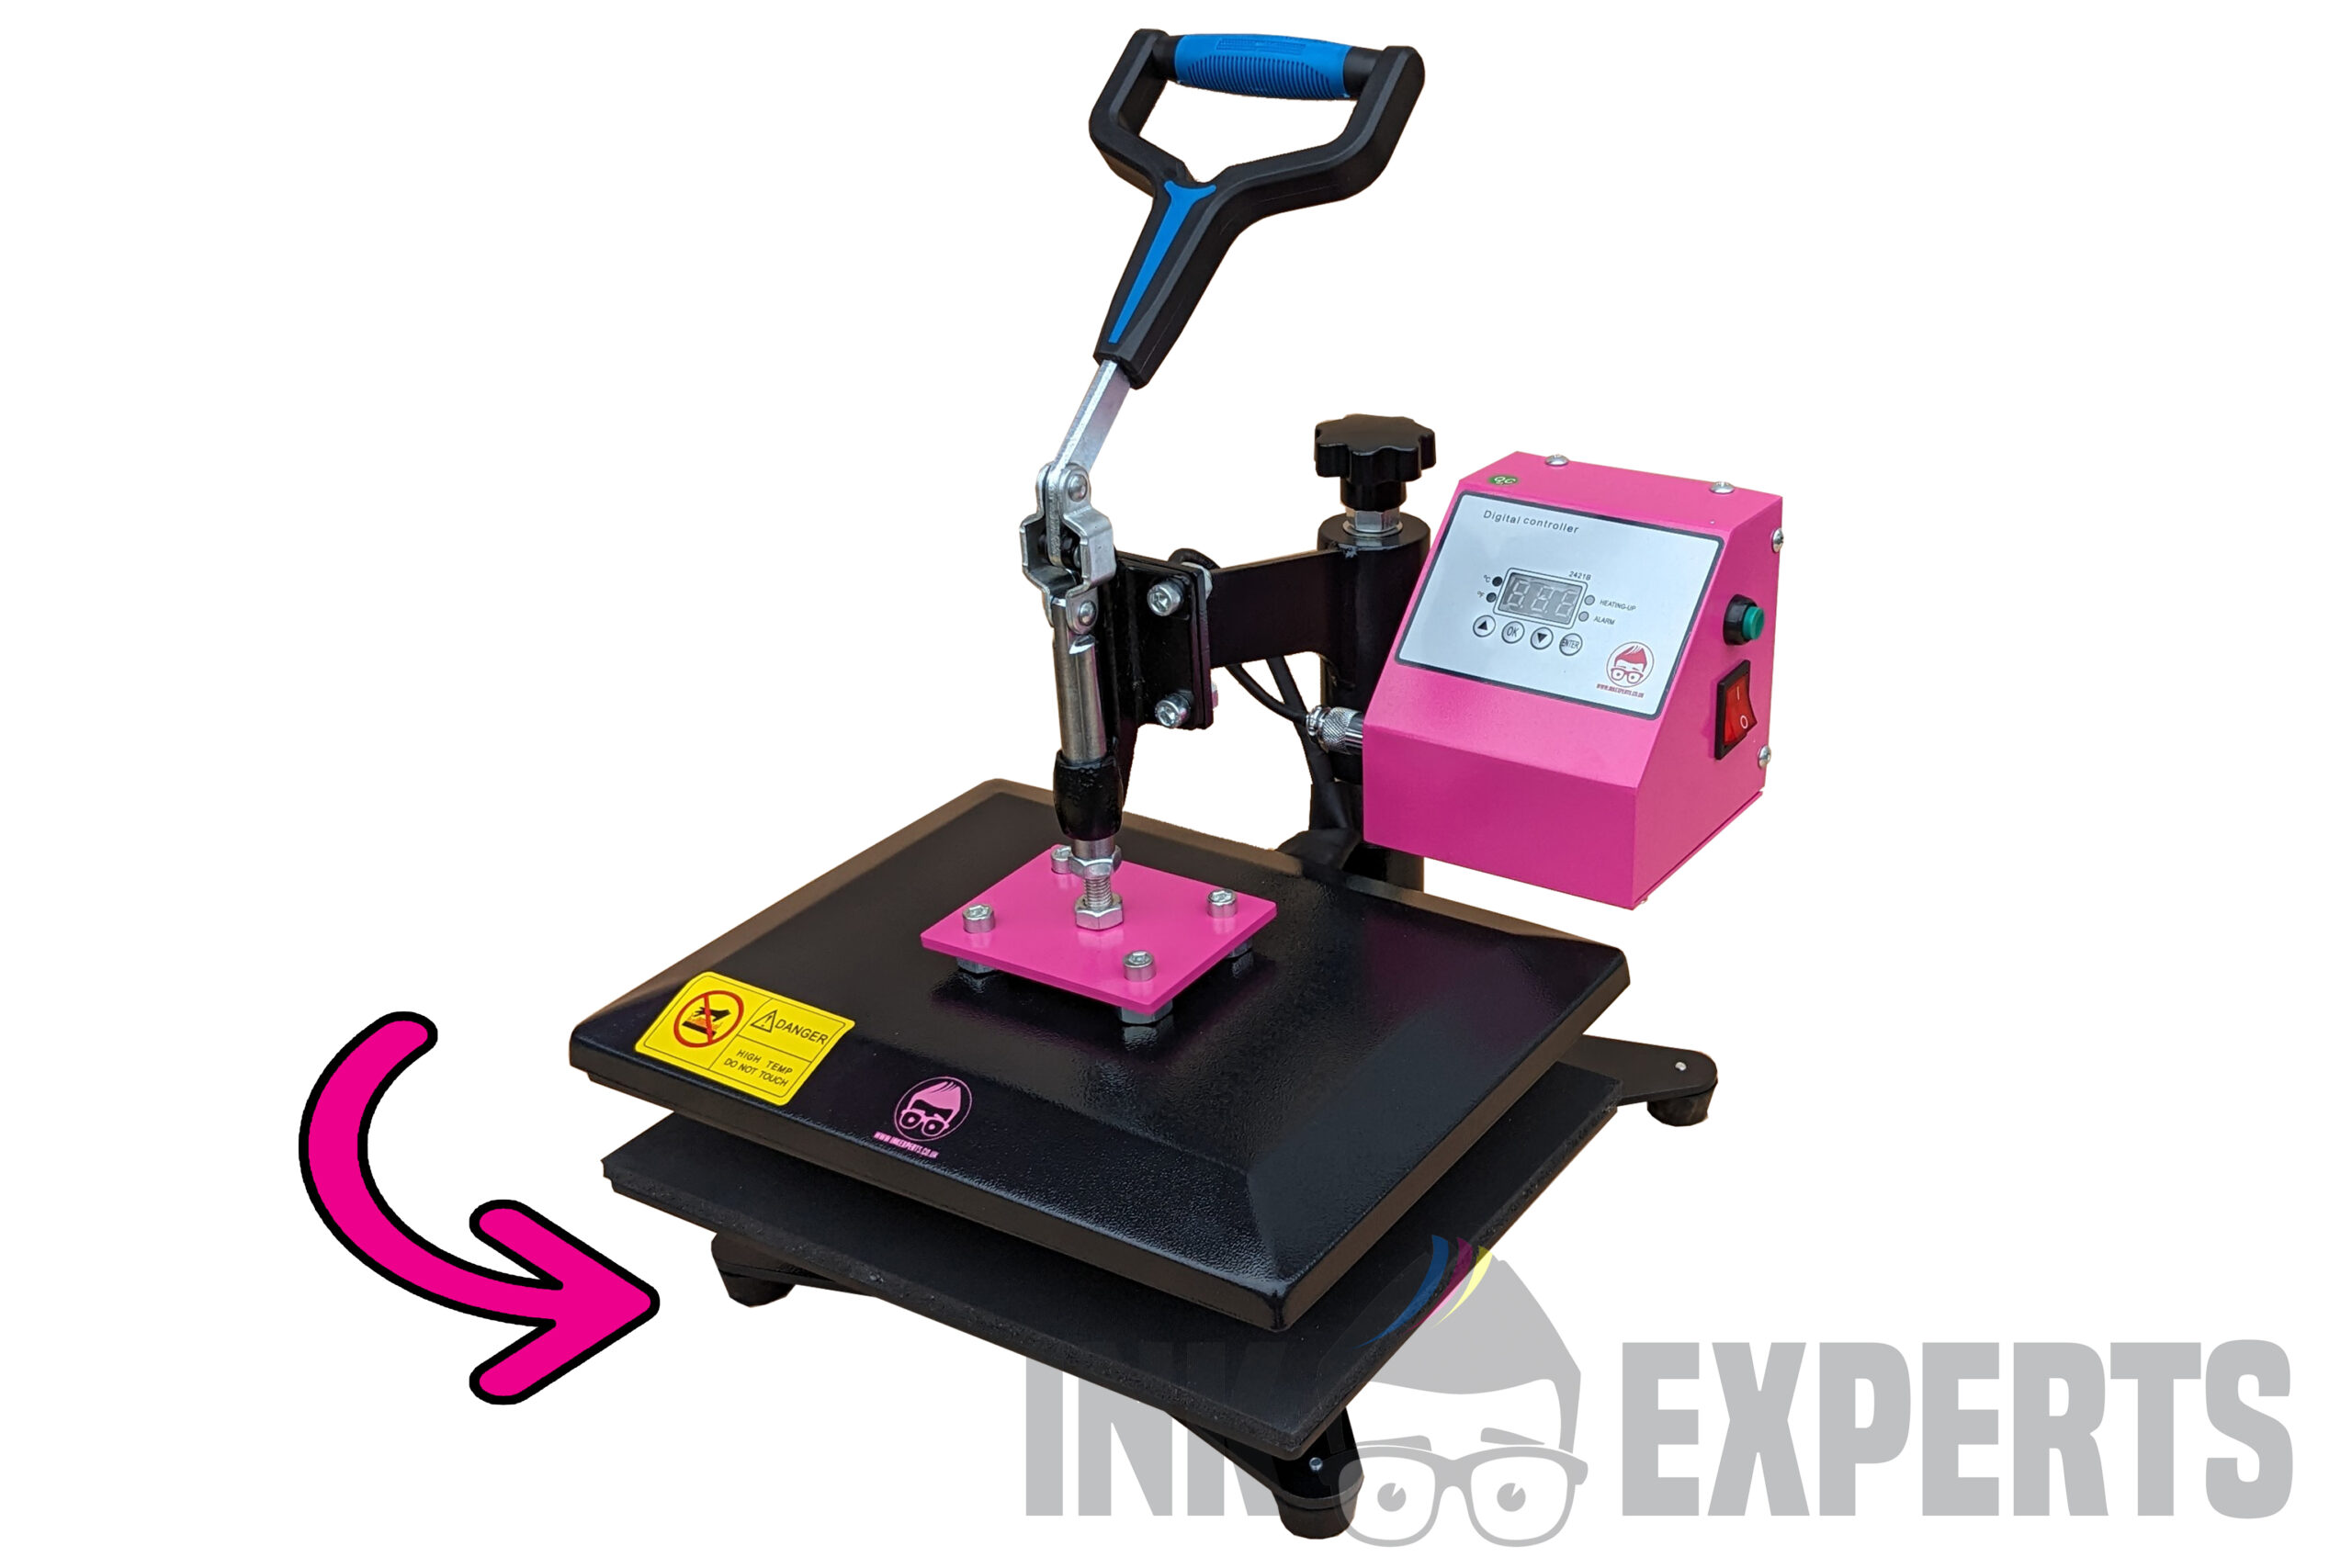 Ink Experts Swing Away Heat Press Machine - 30 x 23cm